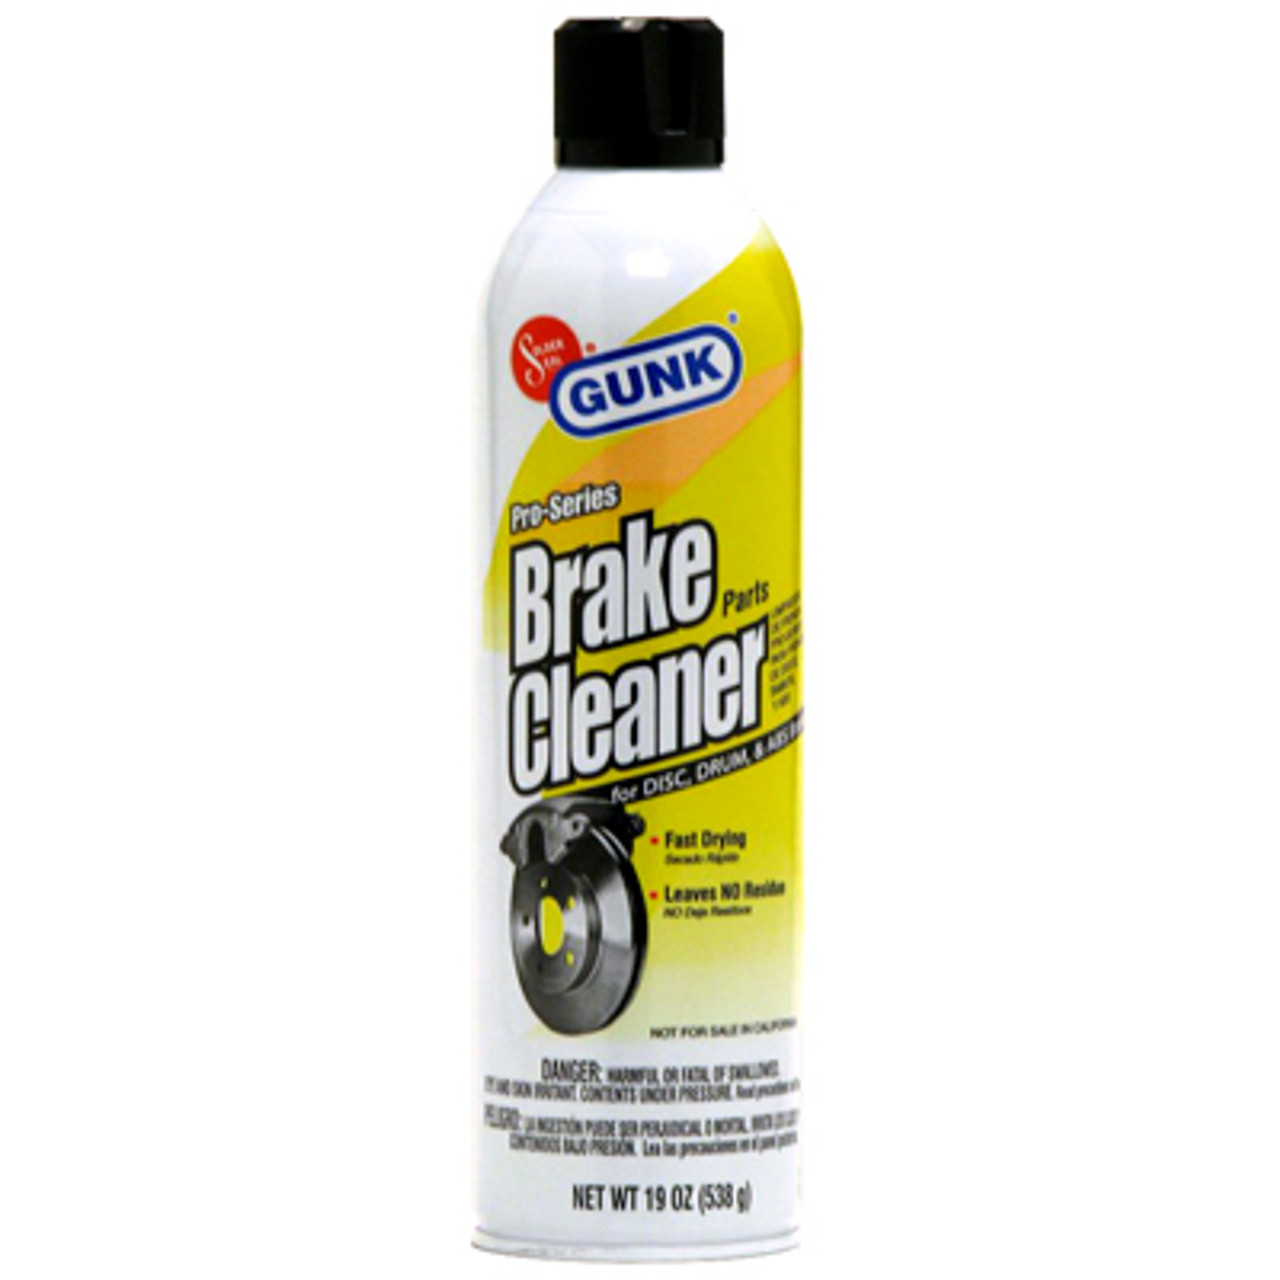 Brake Parts Cleaner